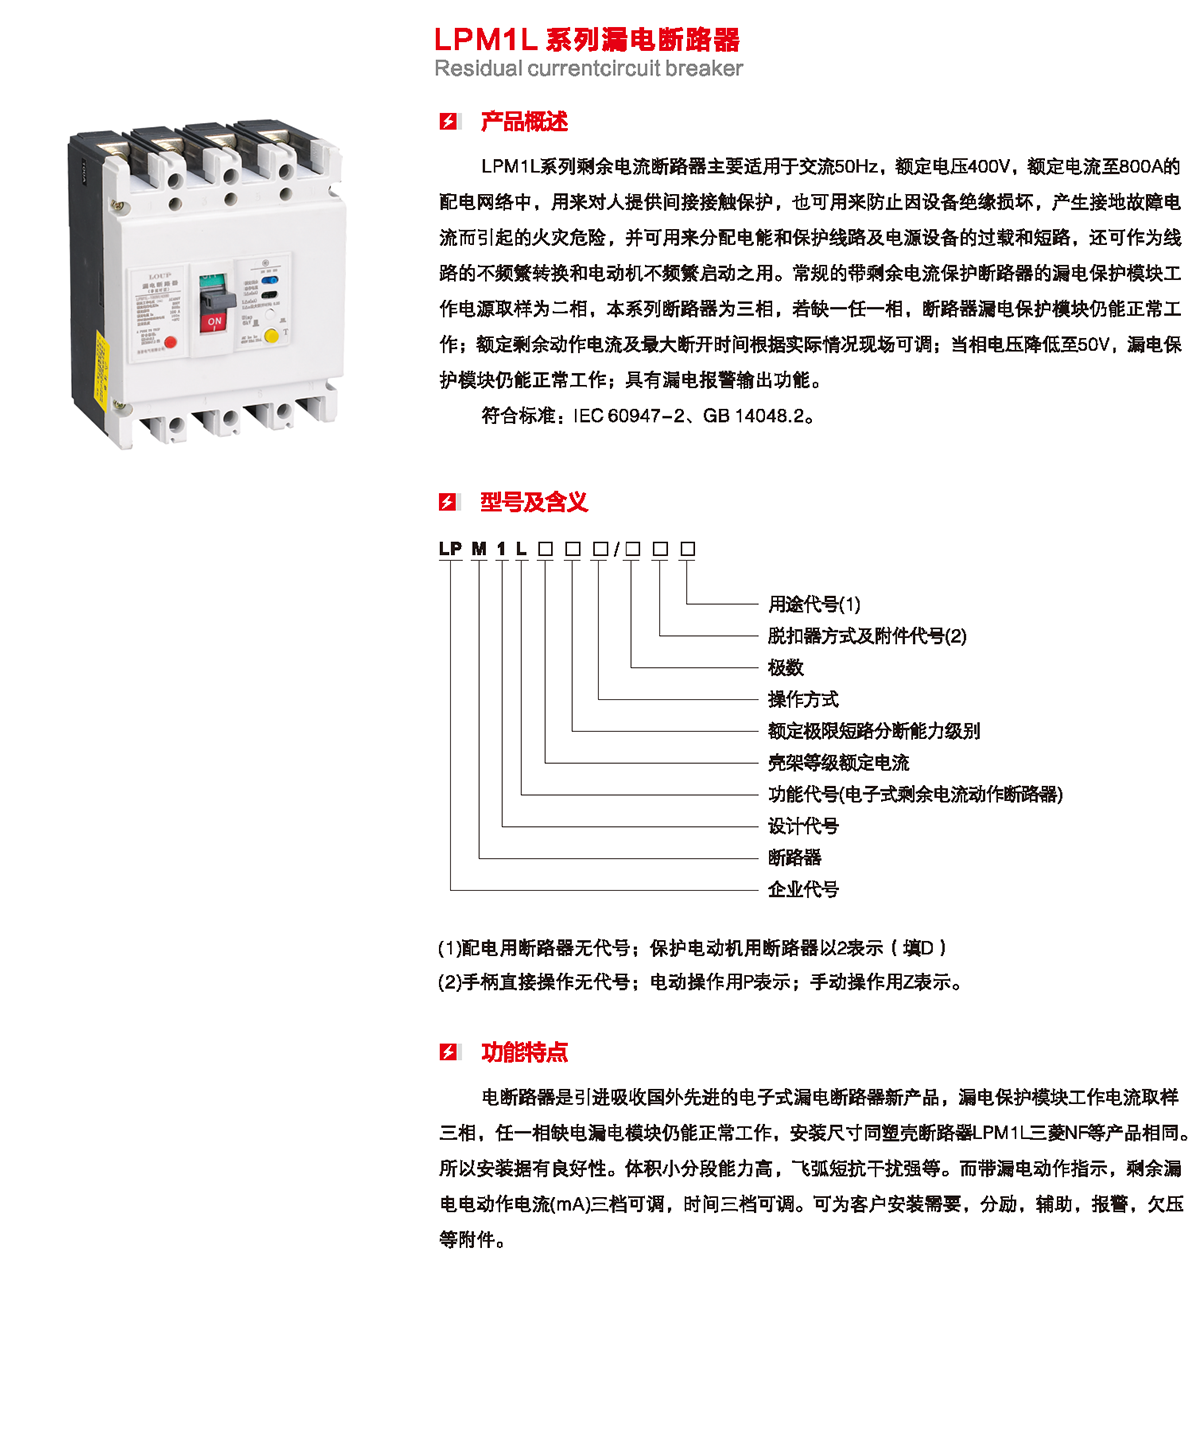 LPM1L系列漏電斷路器產品概述、型號含義、功能特點